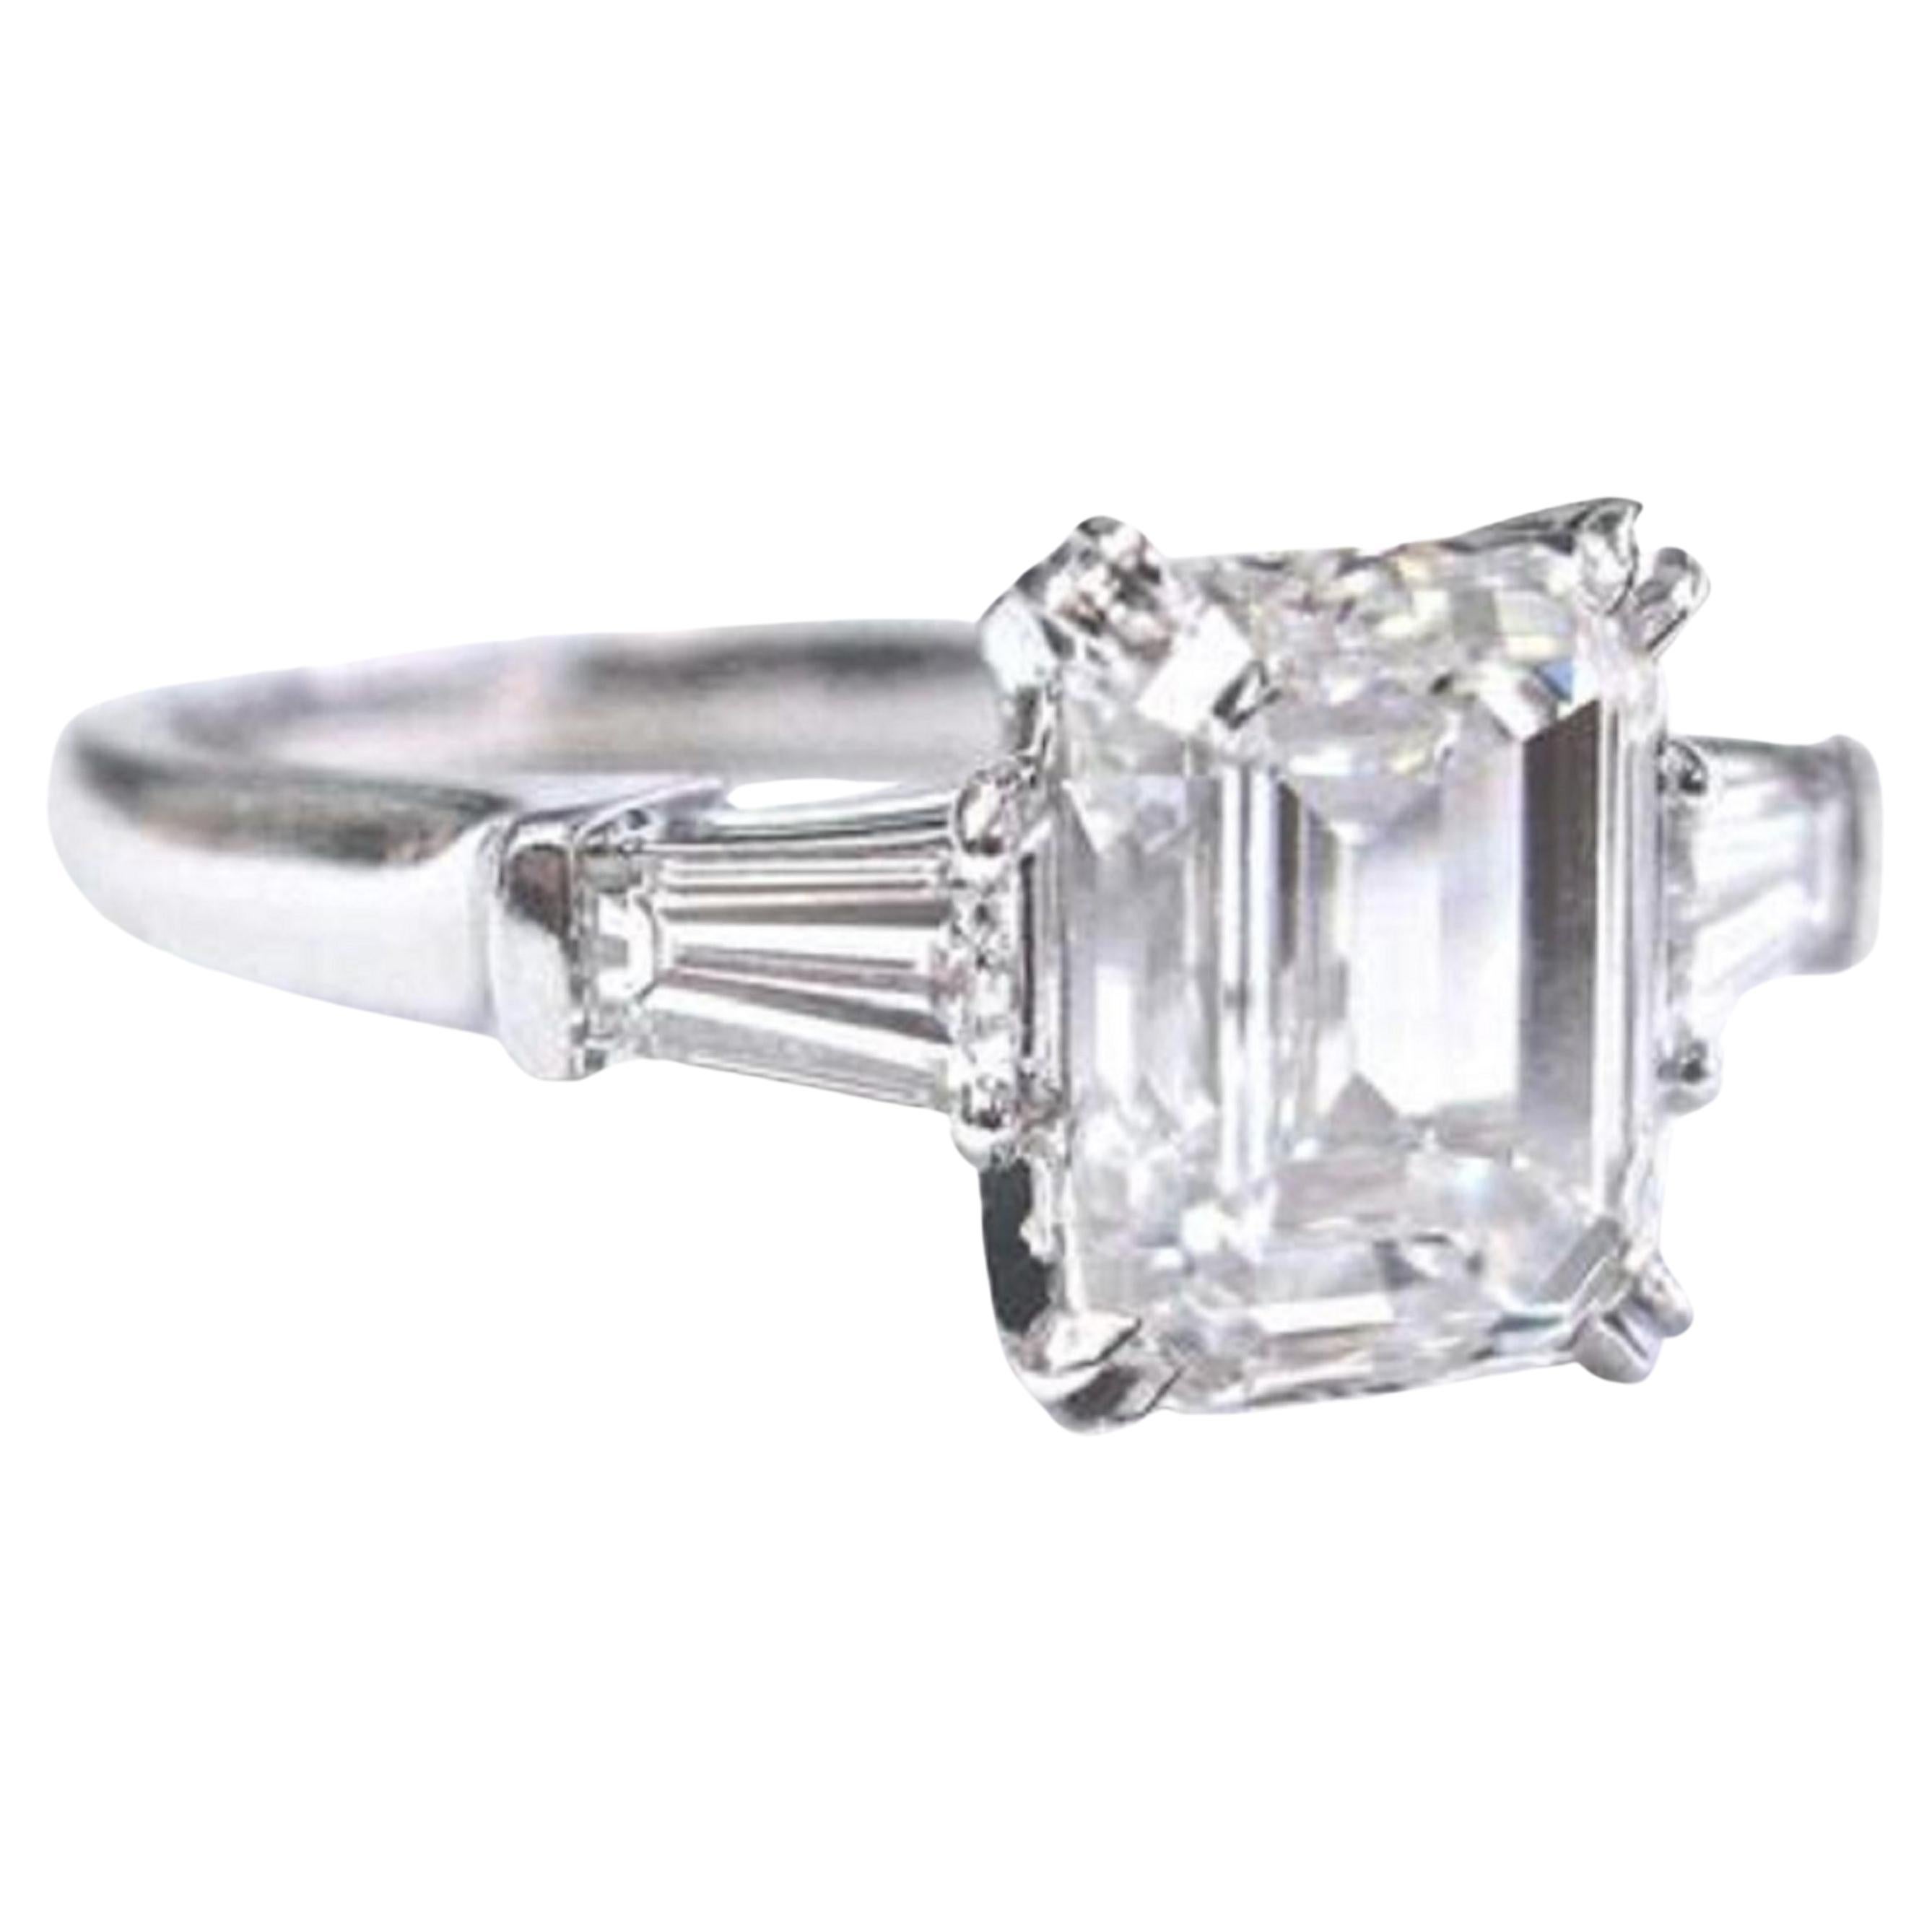 GIA Certified 3 Carat Emerald Cut Diamond Ring H Color VVS2 Clarity